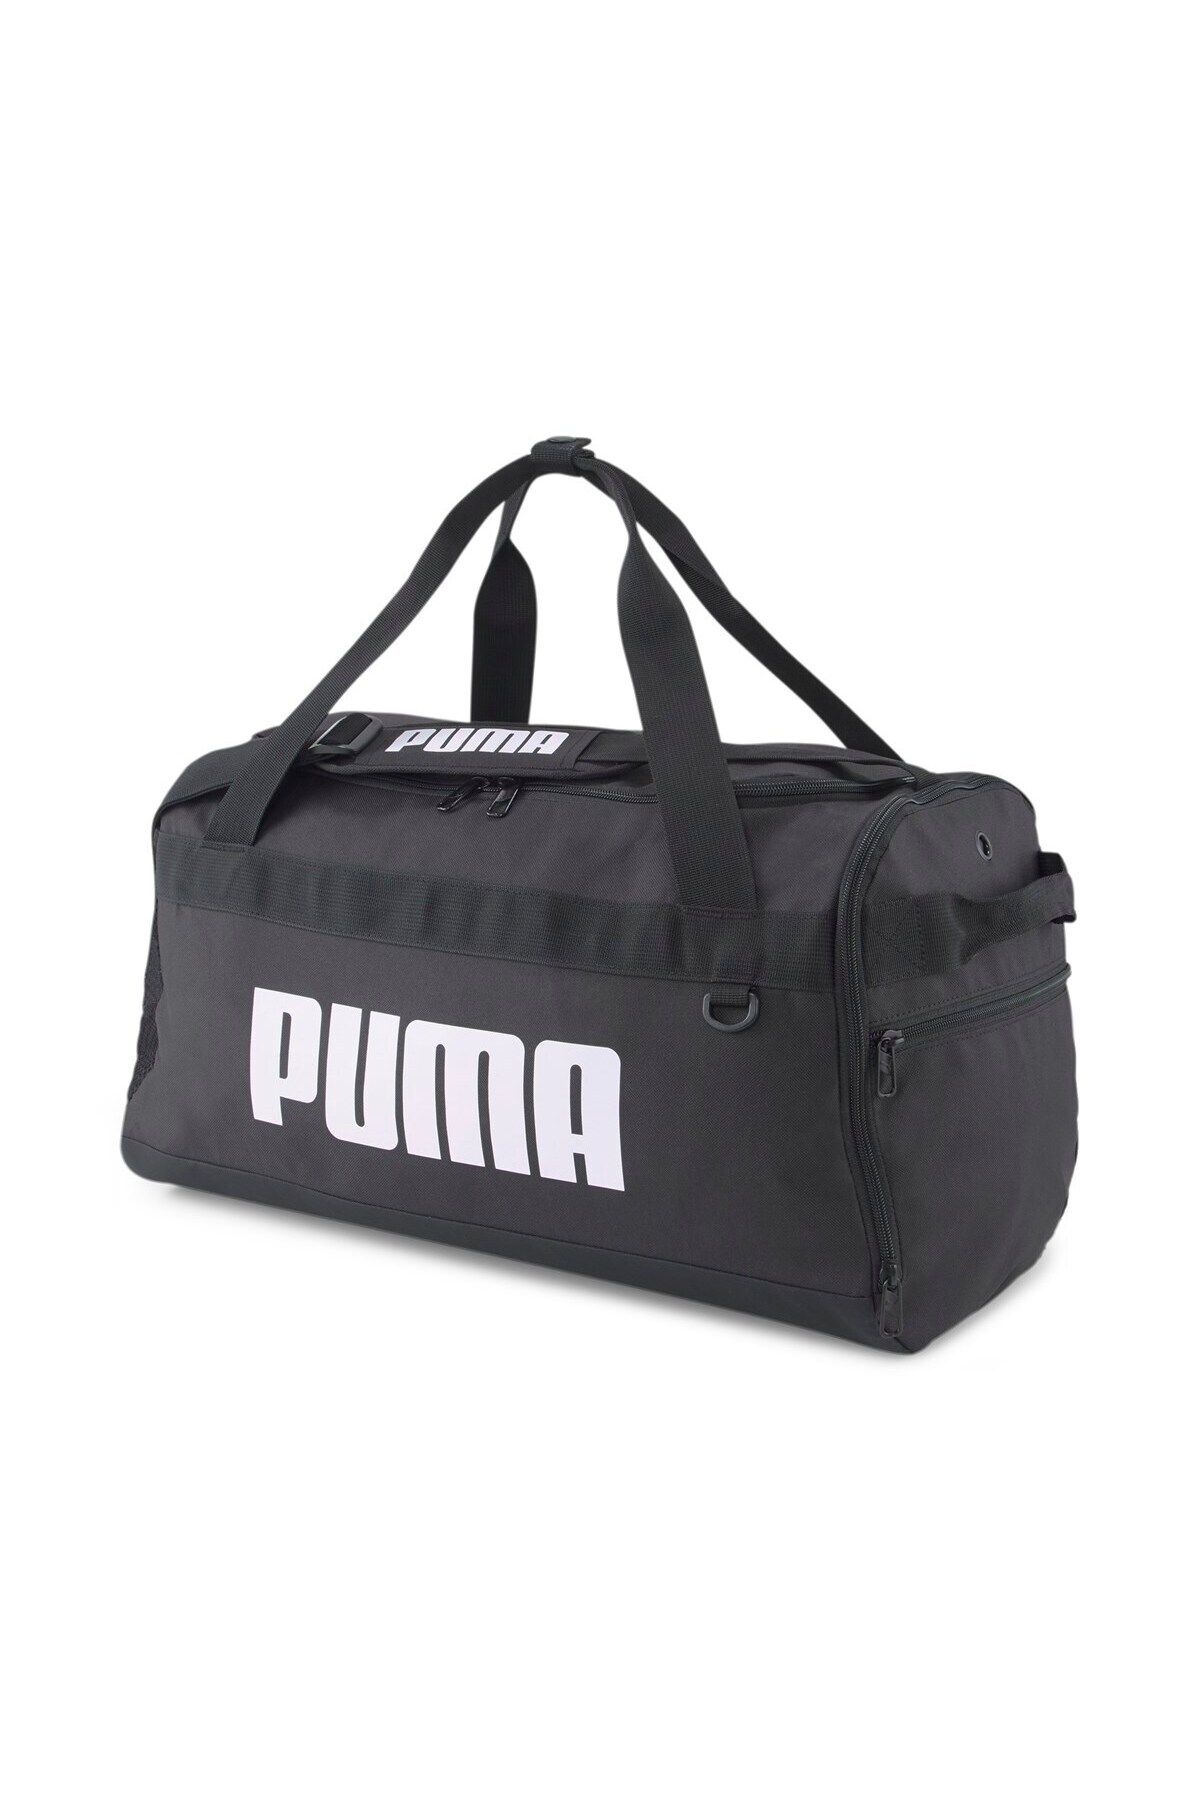 Puma Challenger Duffel Bag S07953001